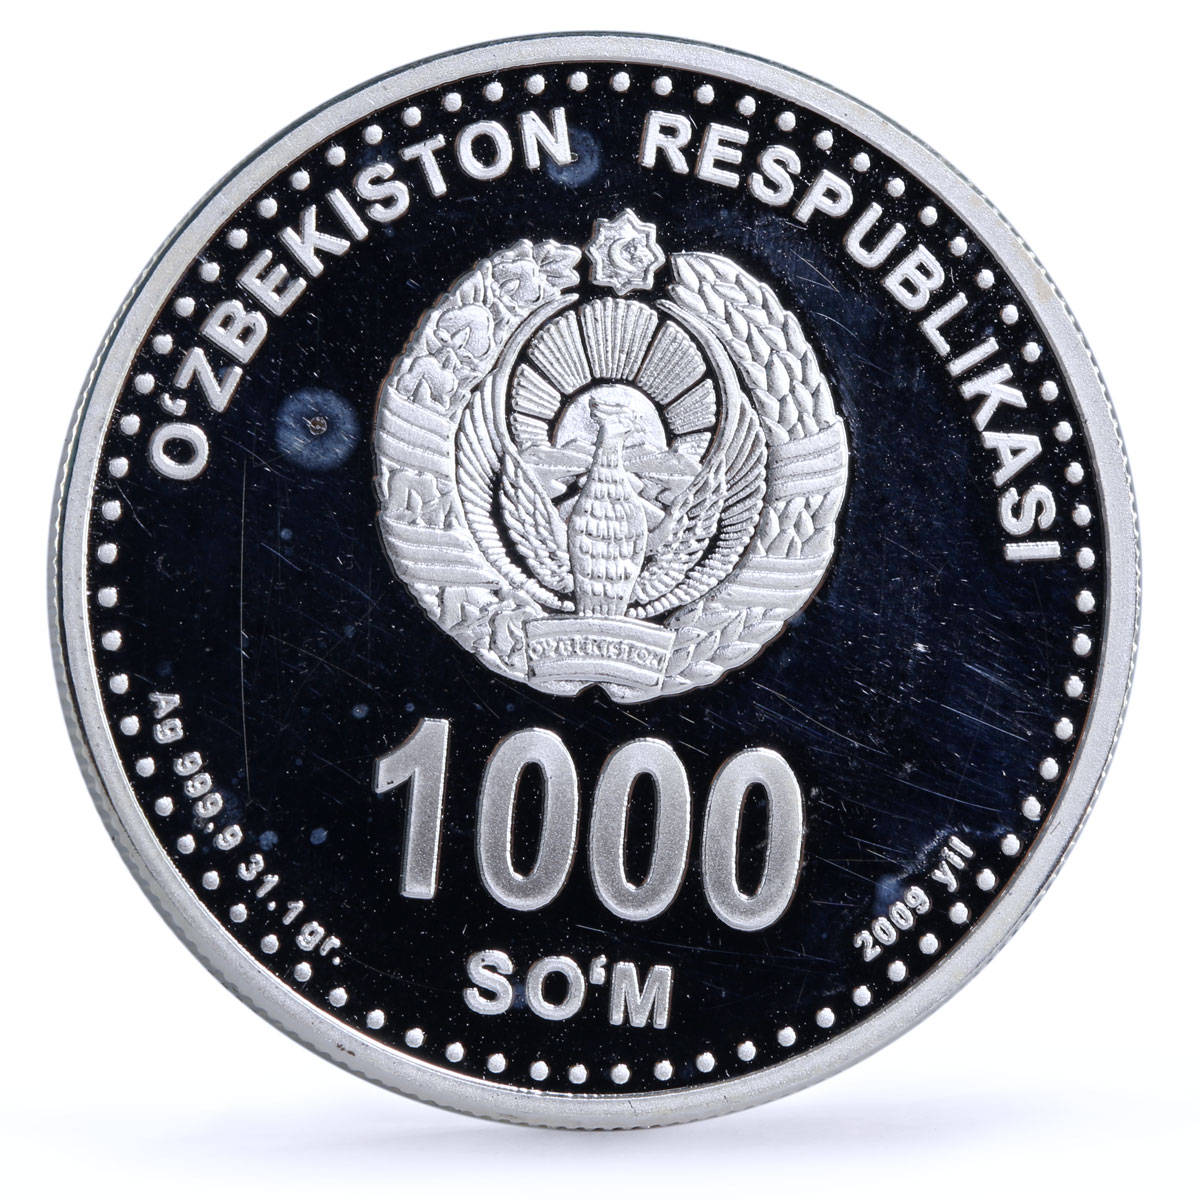 Uzbekistan 1000 som 2200 Years Tashkent City Mother Monument silver coin 2009